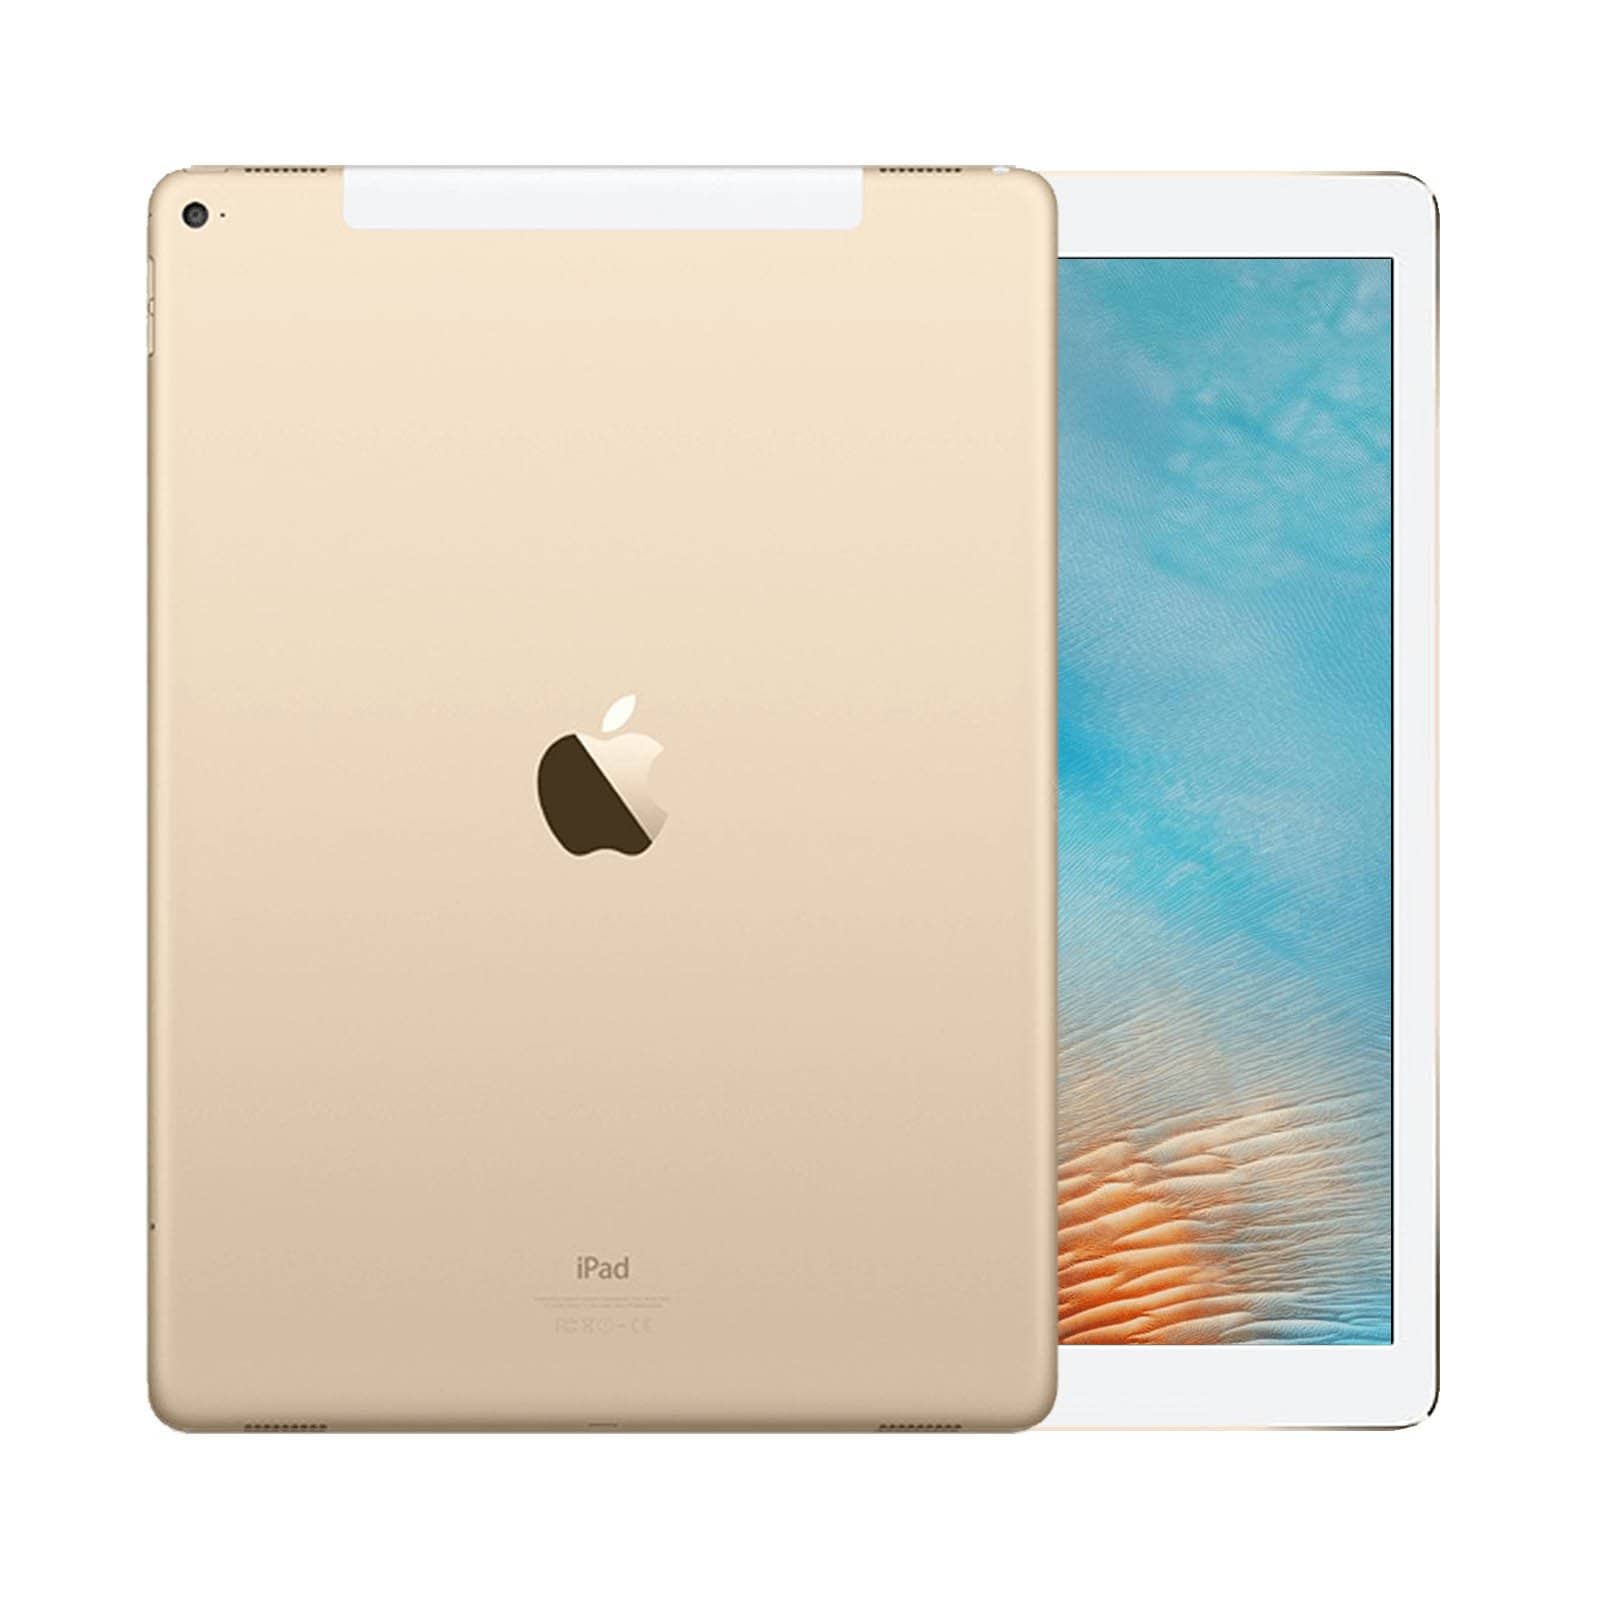 iPad Pro 12.9 Inch 2nd Gen 256GB Gold Pristine - Unlocked 256GB Gold Pristine